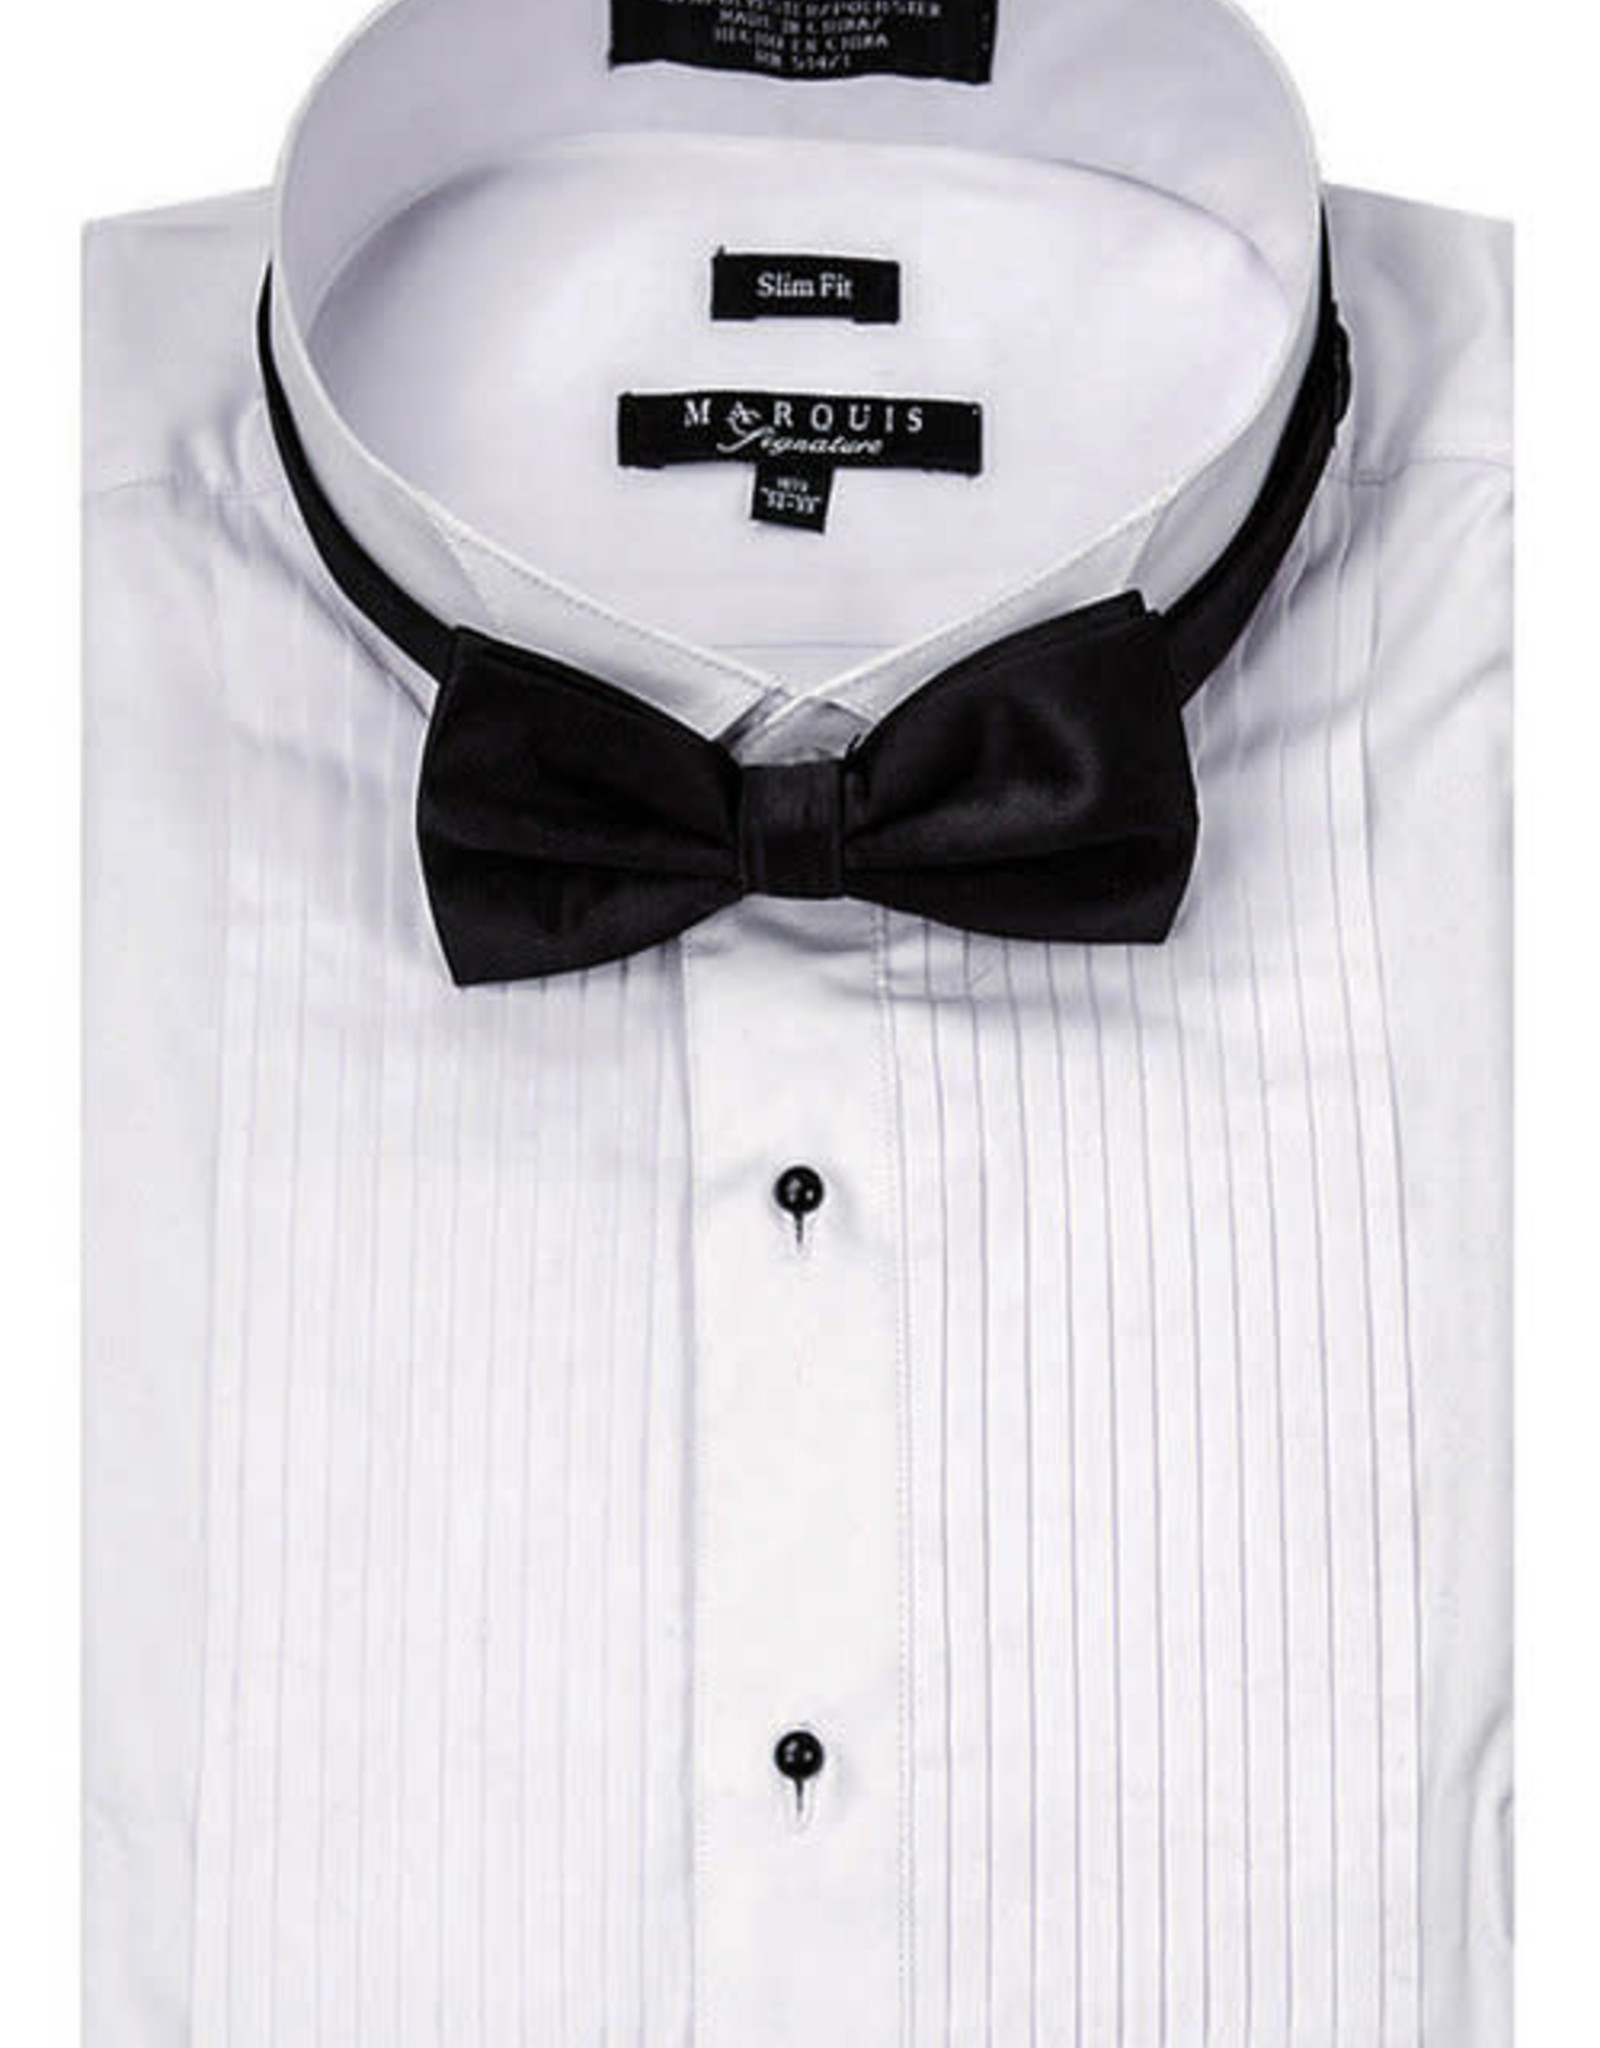 Marquis Tuxedo Slim Fit Dress Shirt Pleated White